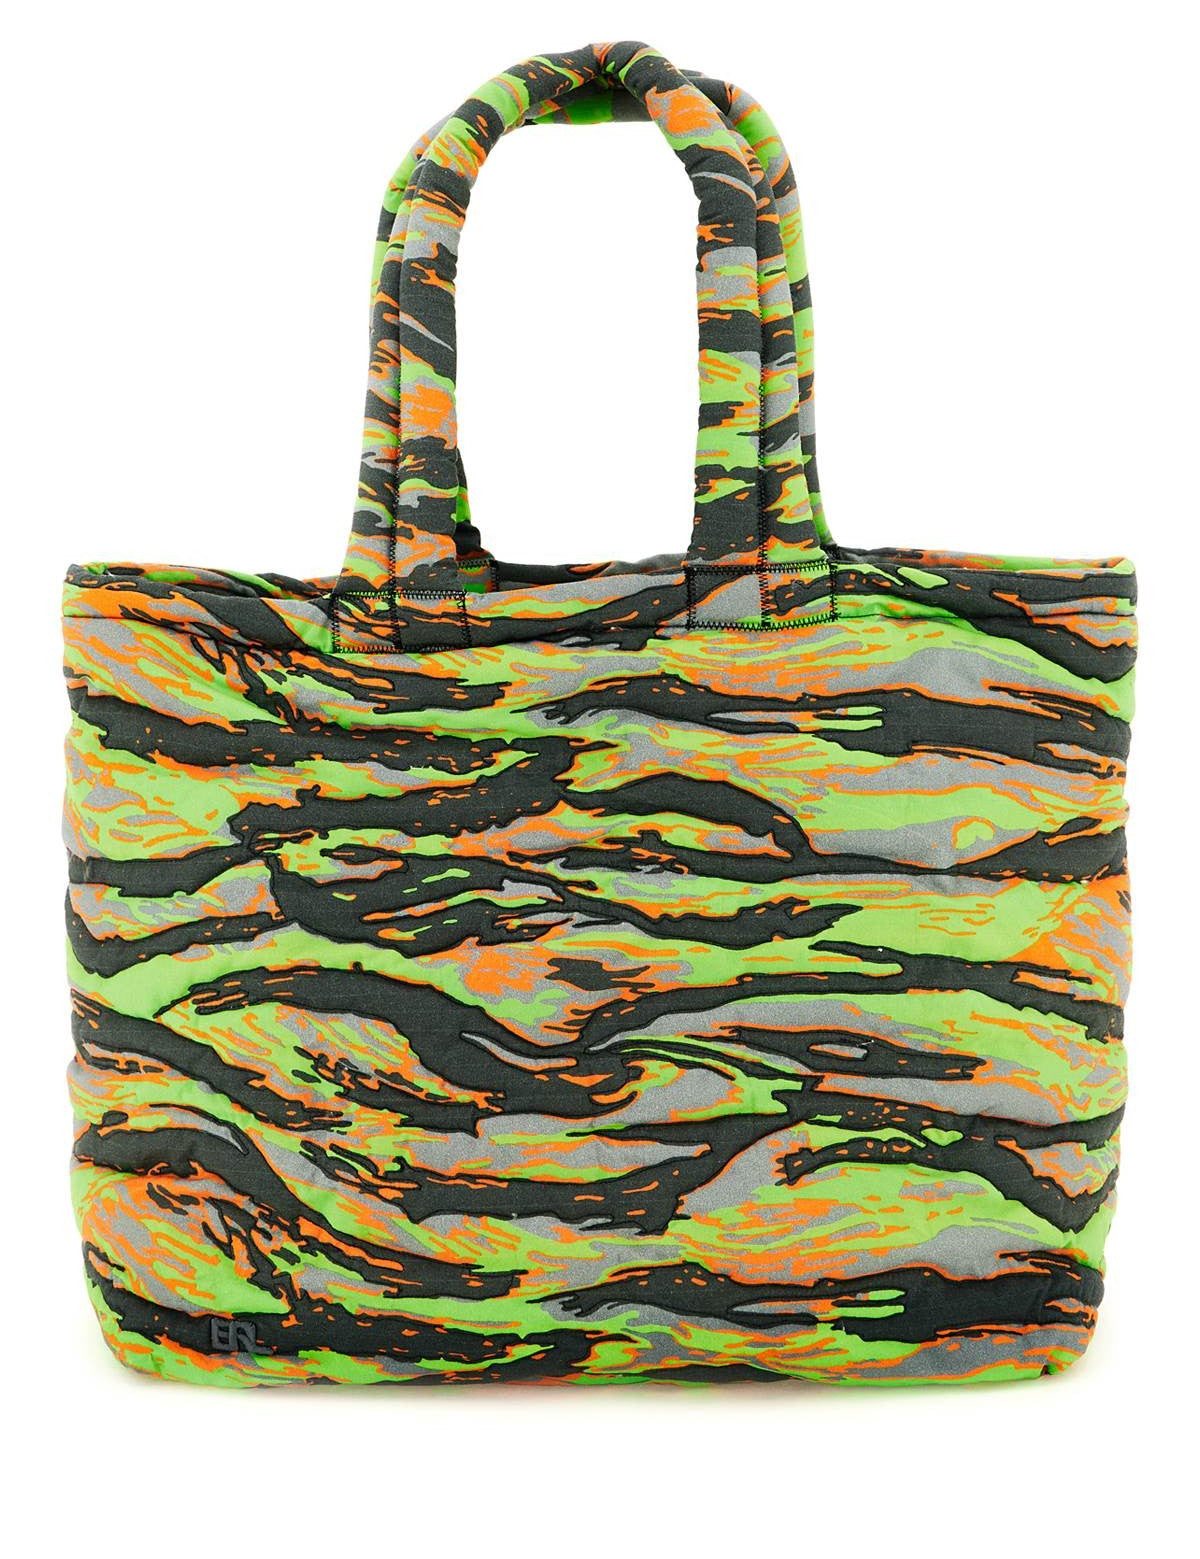 erl-camouflage-puffer-bag.jpg